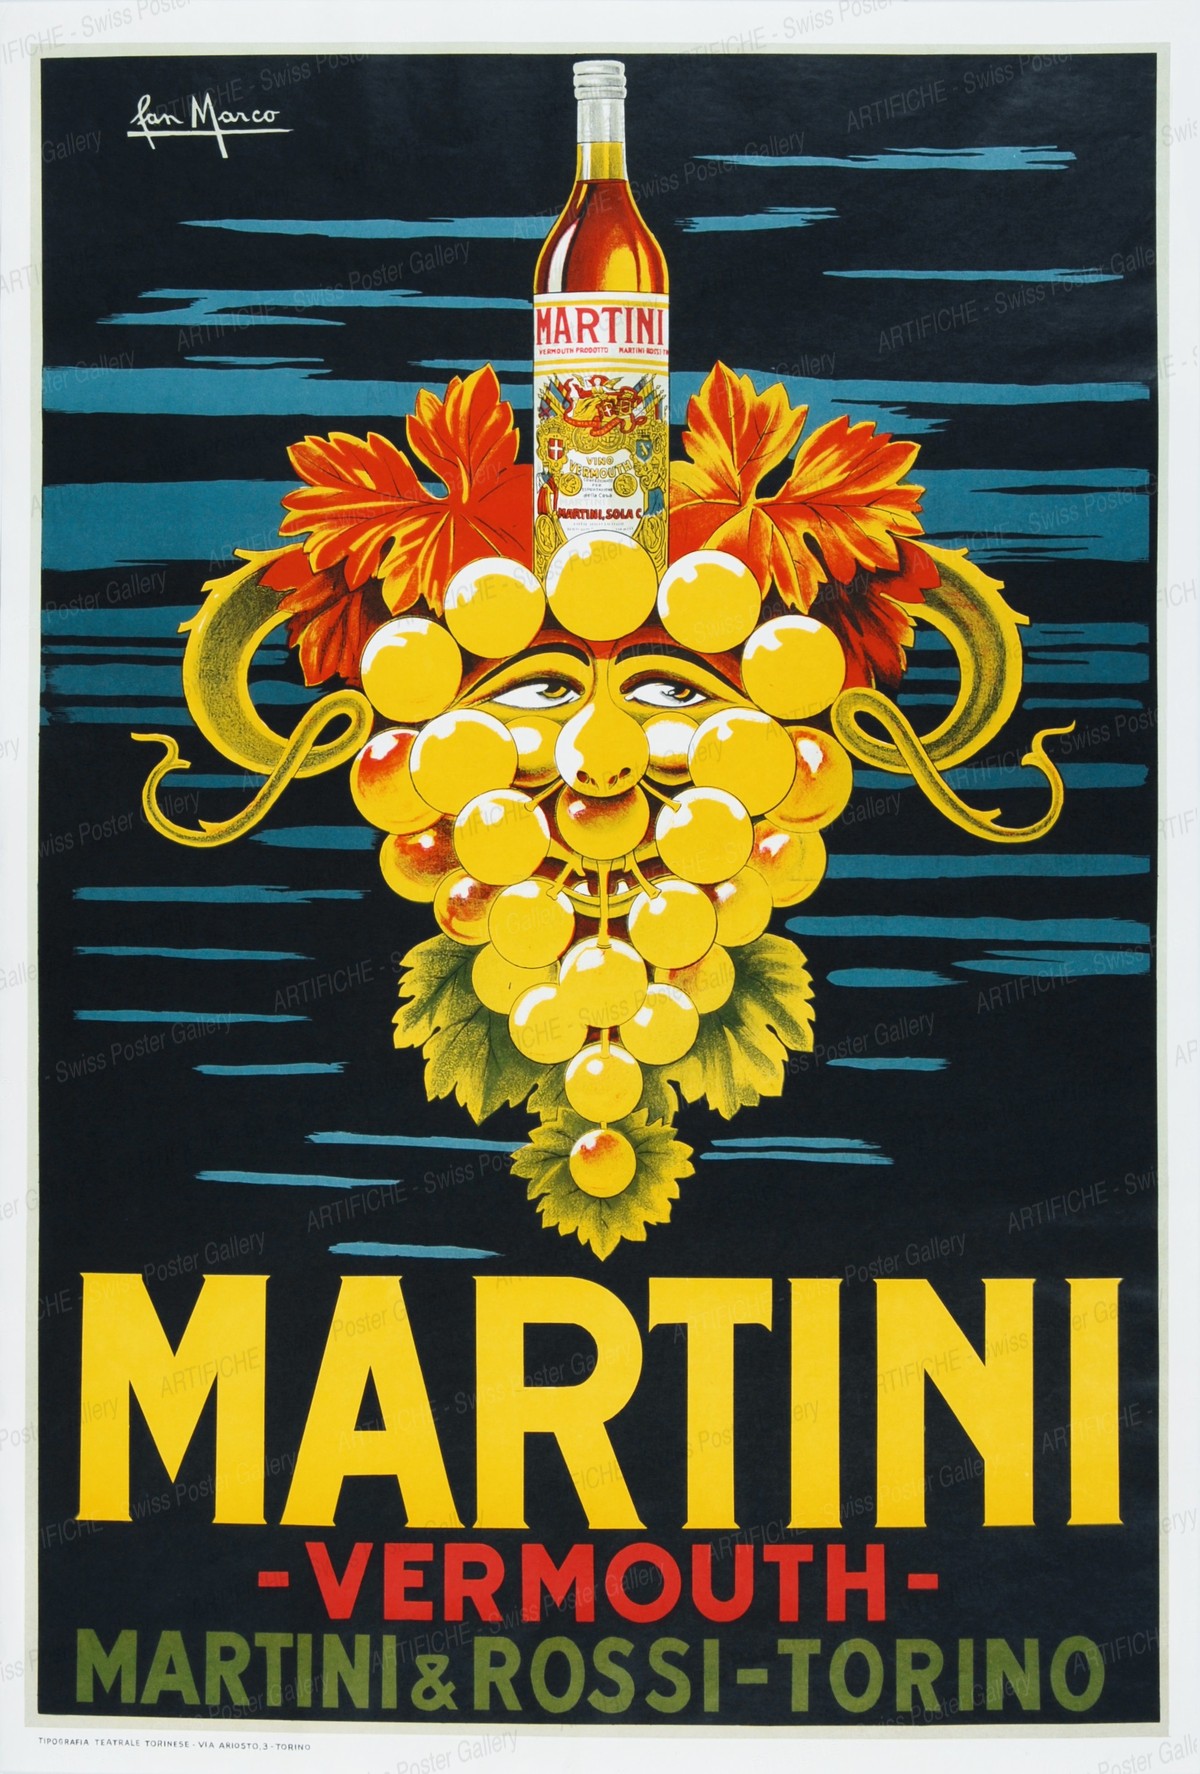 MARTINI – VERMOUTH – Martini & Rossi Torino (third edition), San Marco